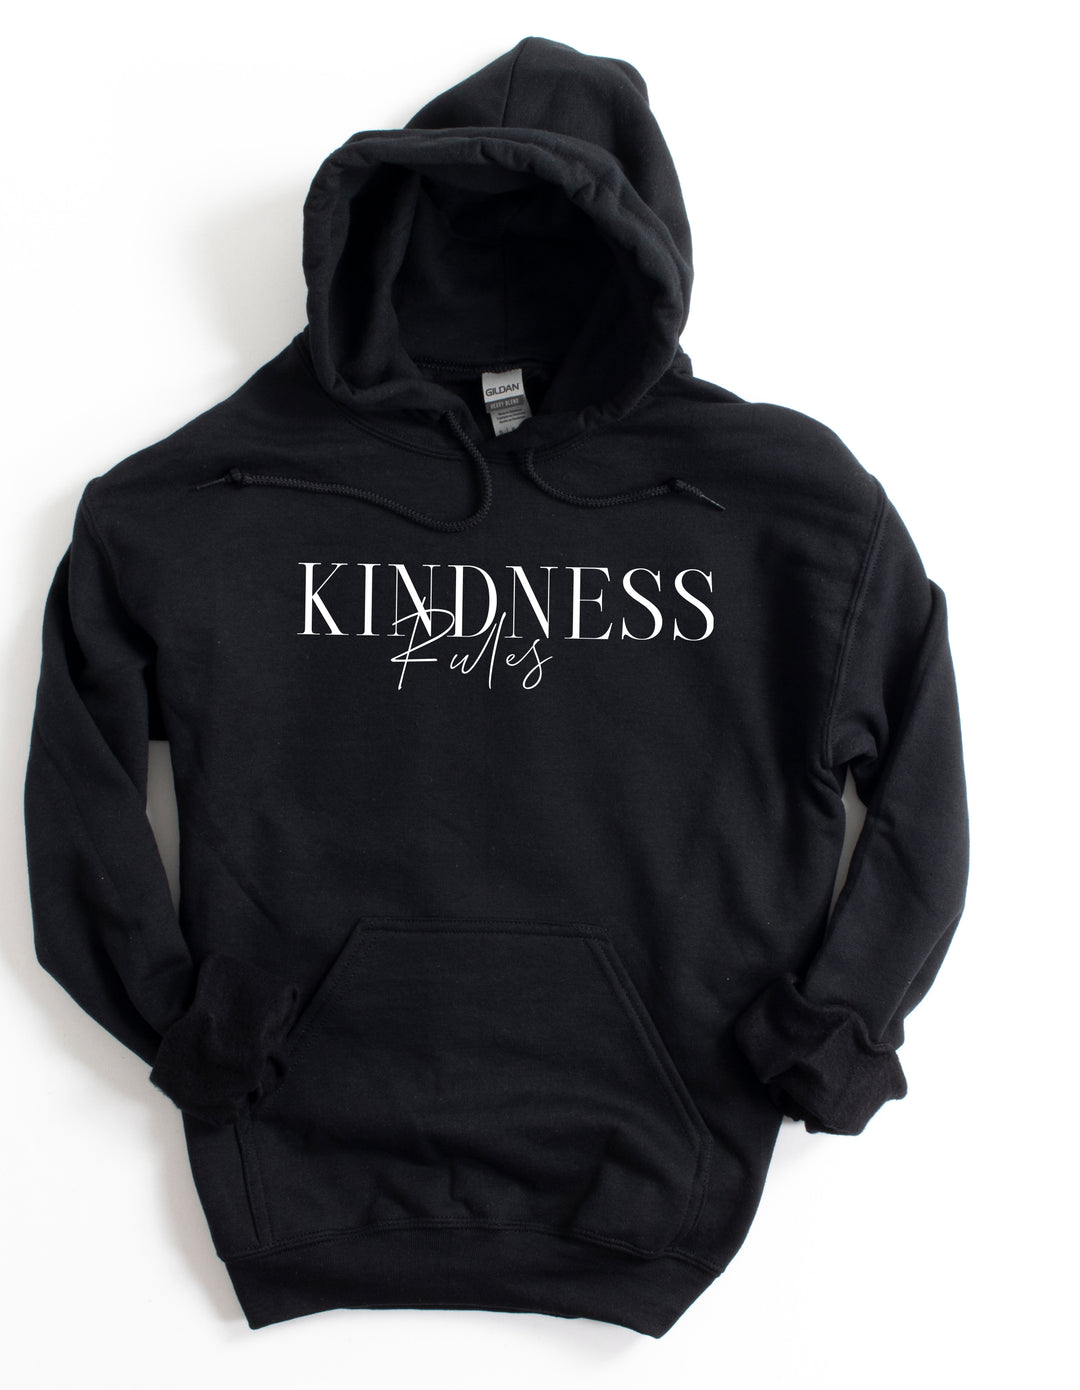 Kindness Rules - Unisex Hoodie Sweatshirt - Joy & Country